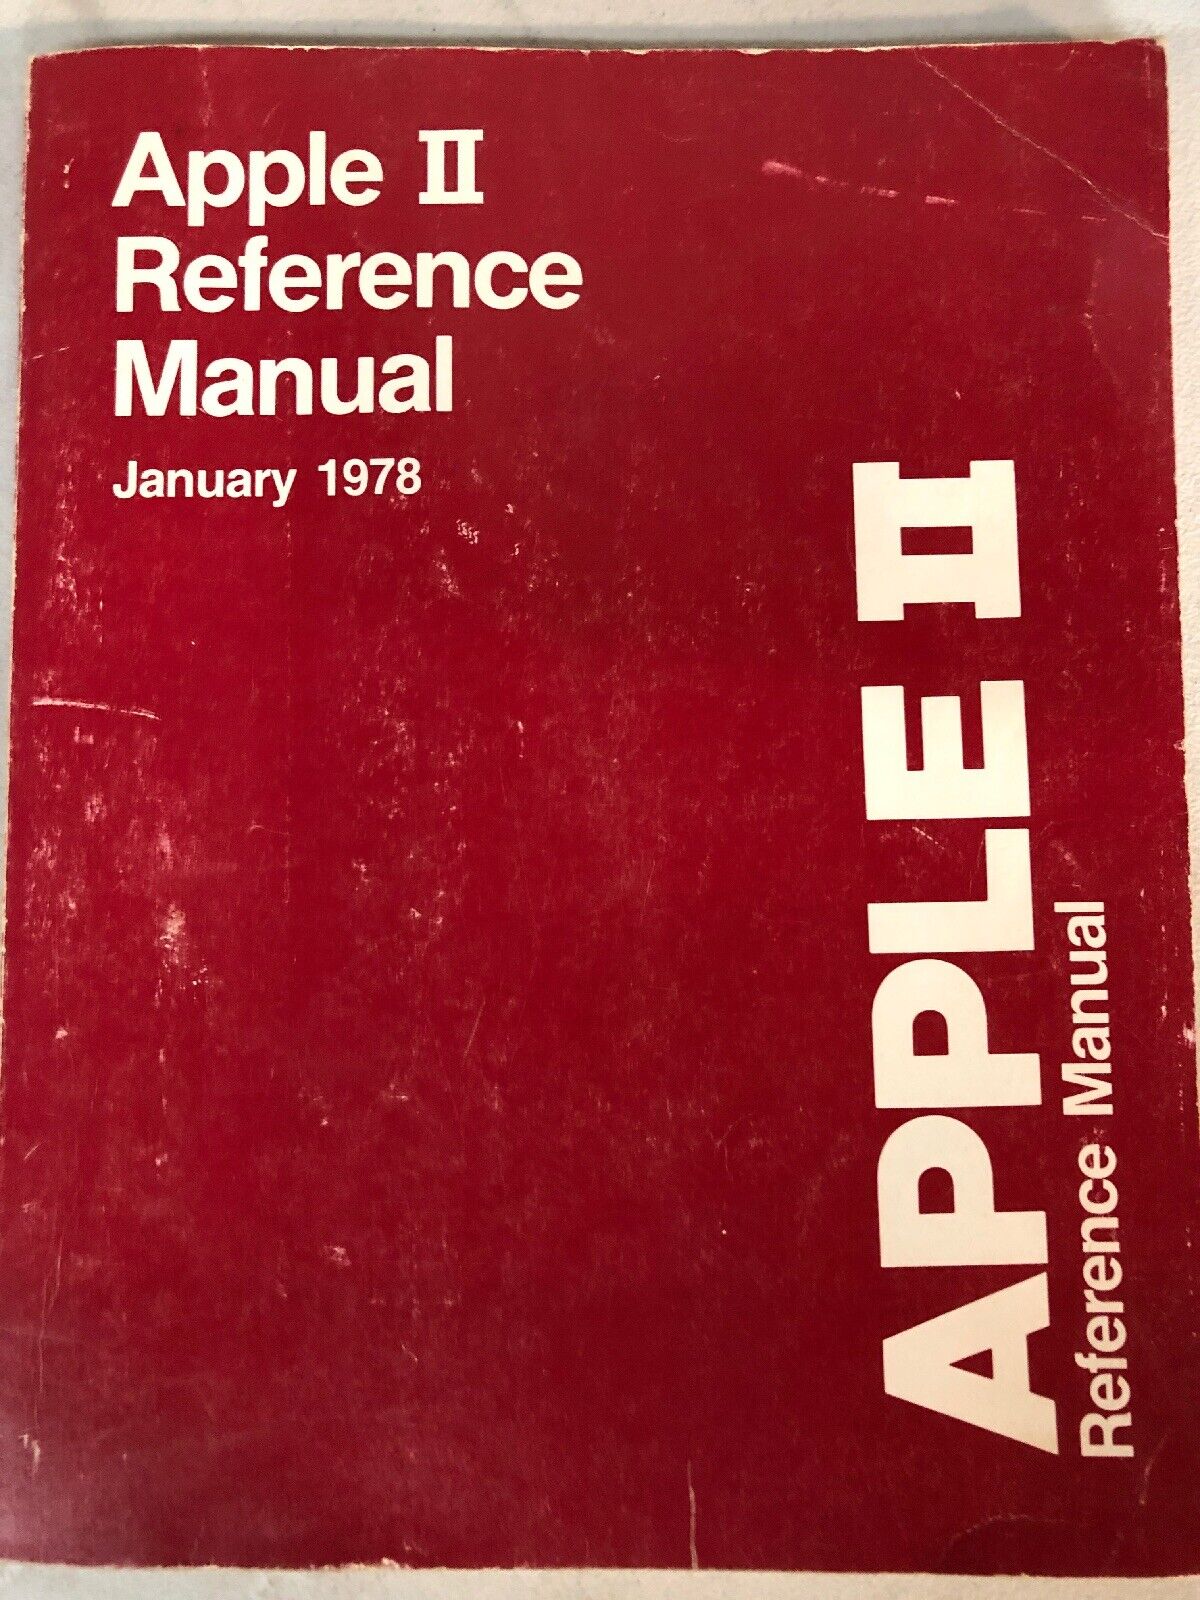 1978 APPLE ll REFERENCE MANUAL JAN 1978  the original RED BOOK by Steve Wozniak